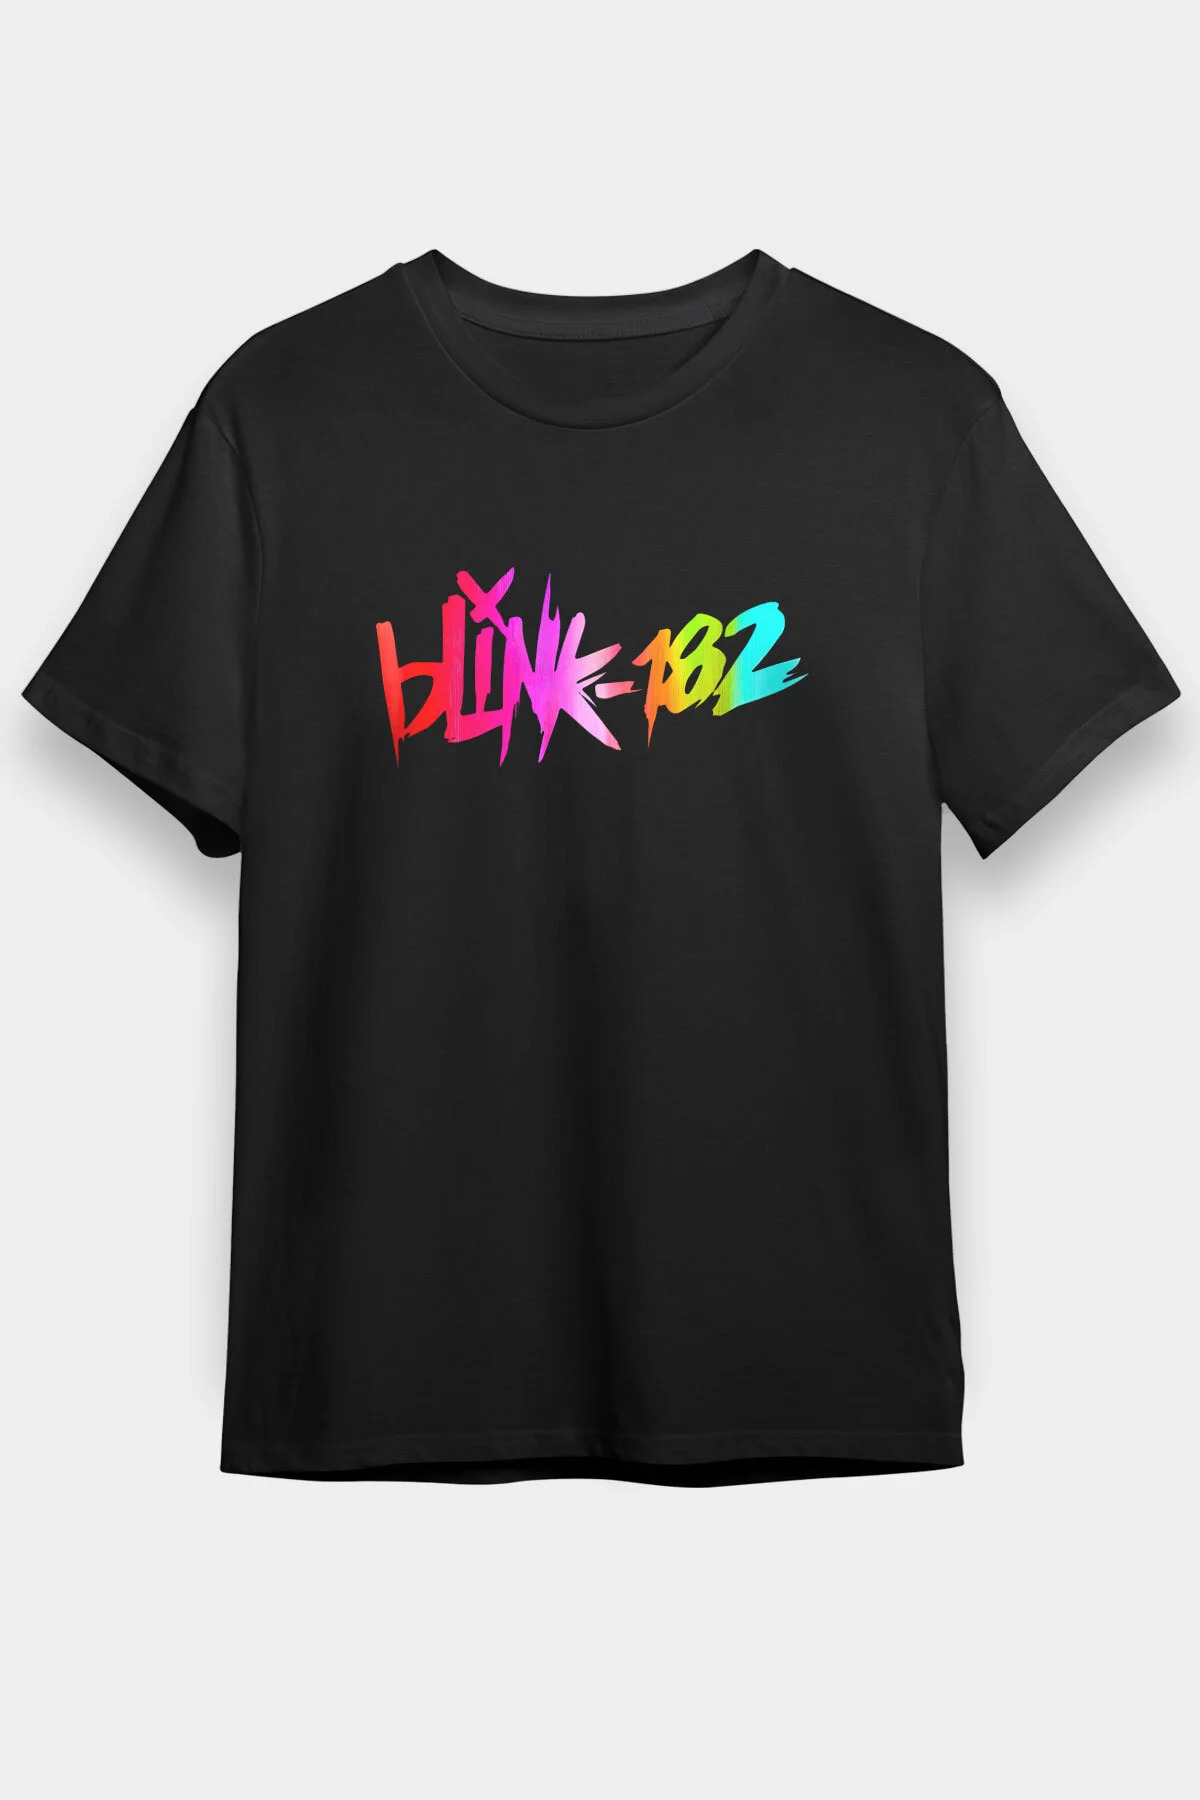 Blink 182 , Music Band ,Unisex Tshirt 22